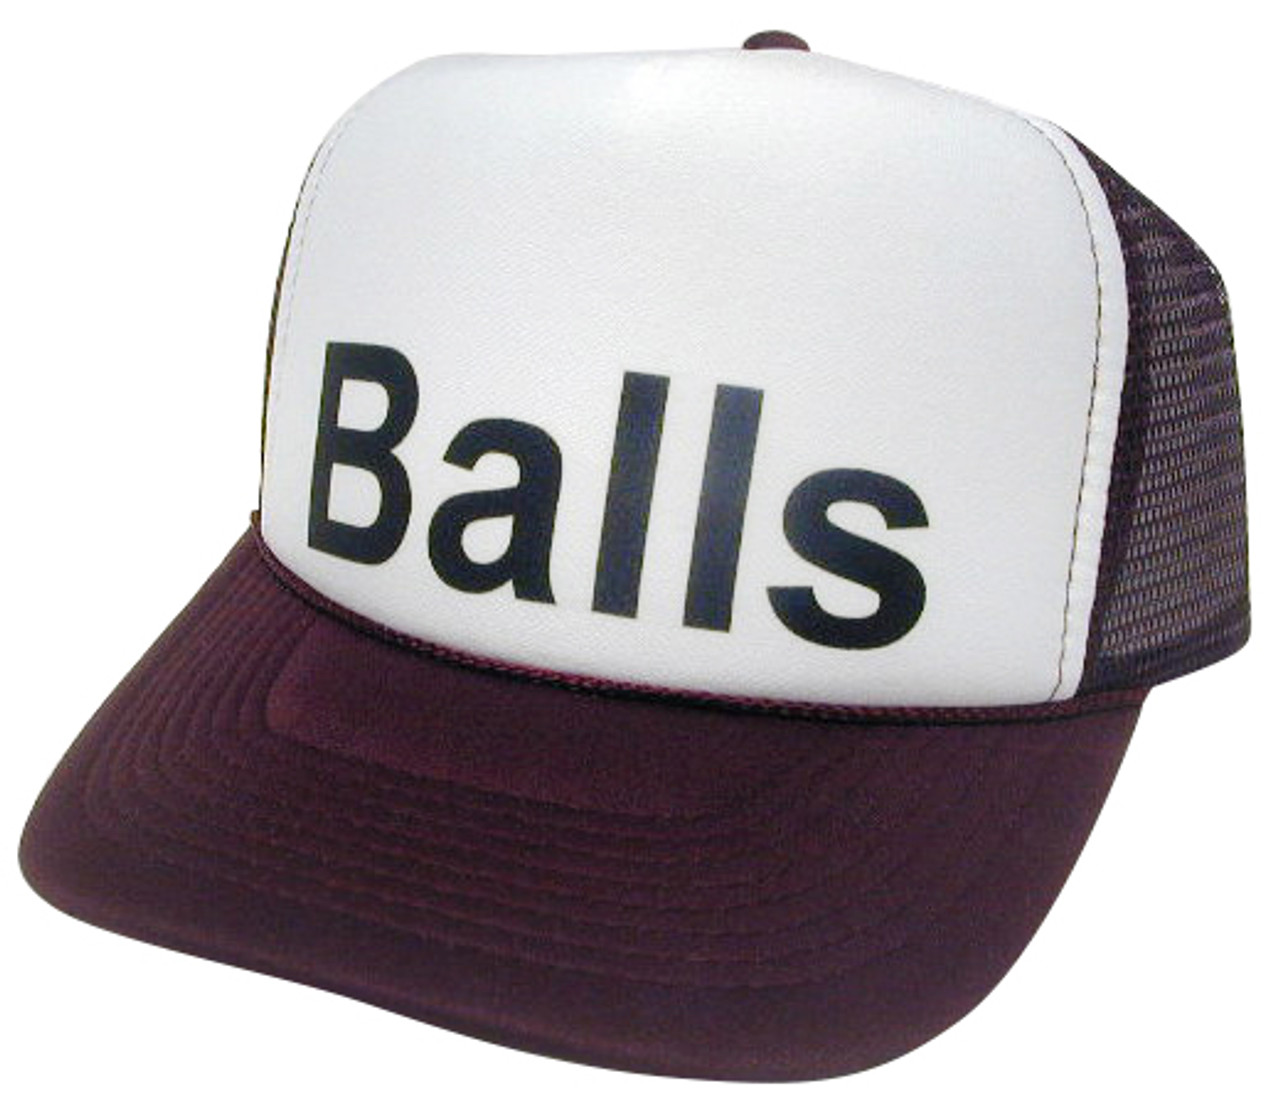 Trucker Hats for Men Women, Funny Gag Gifts Joke, Classic Adjustable Mesh  Baseball Cap Snapback Hat Black